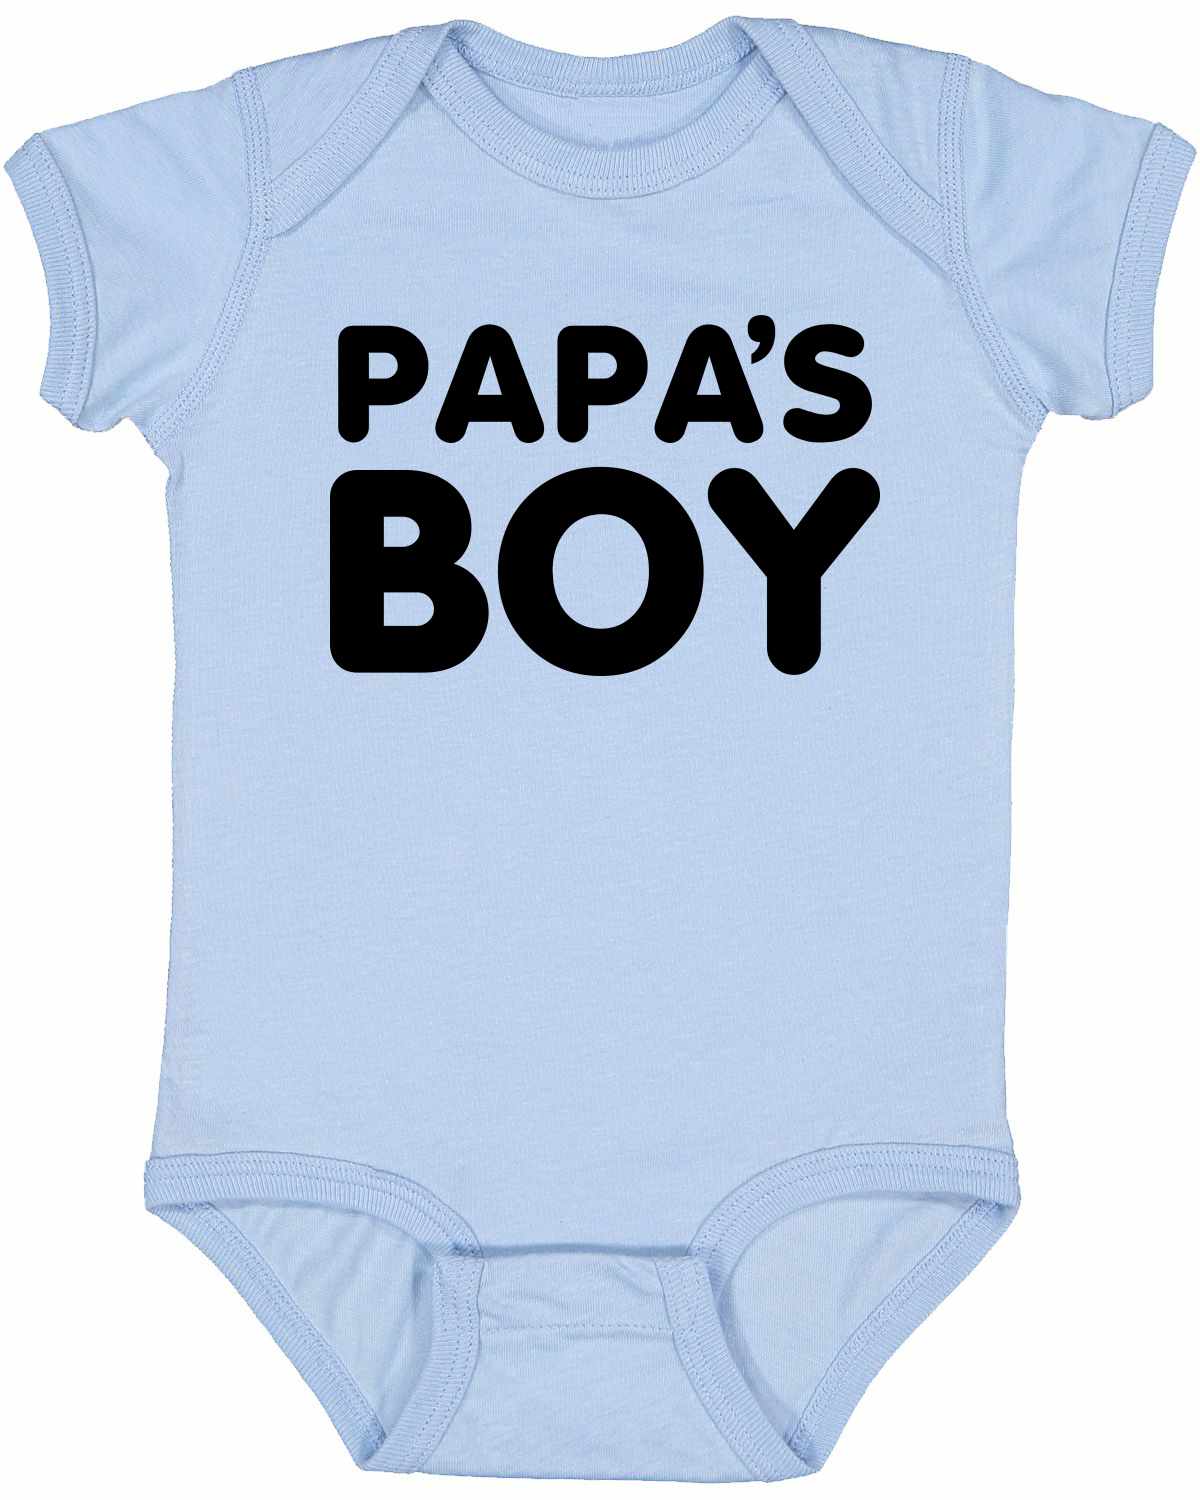 Papa's Boy on Infant BodySuit (#1217-10)